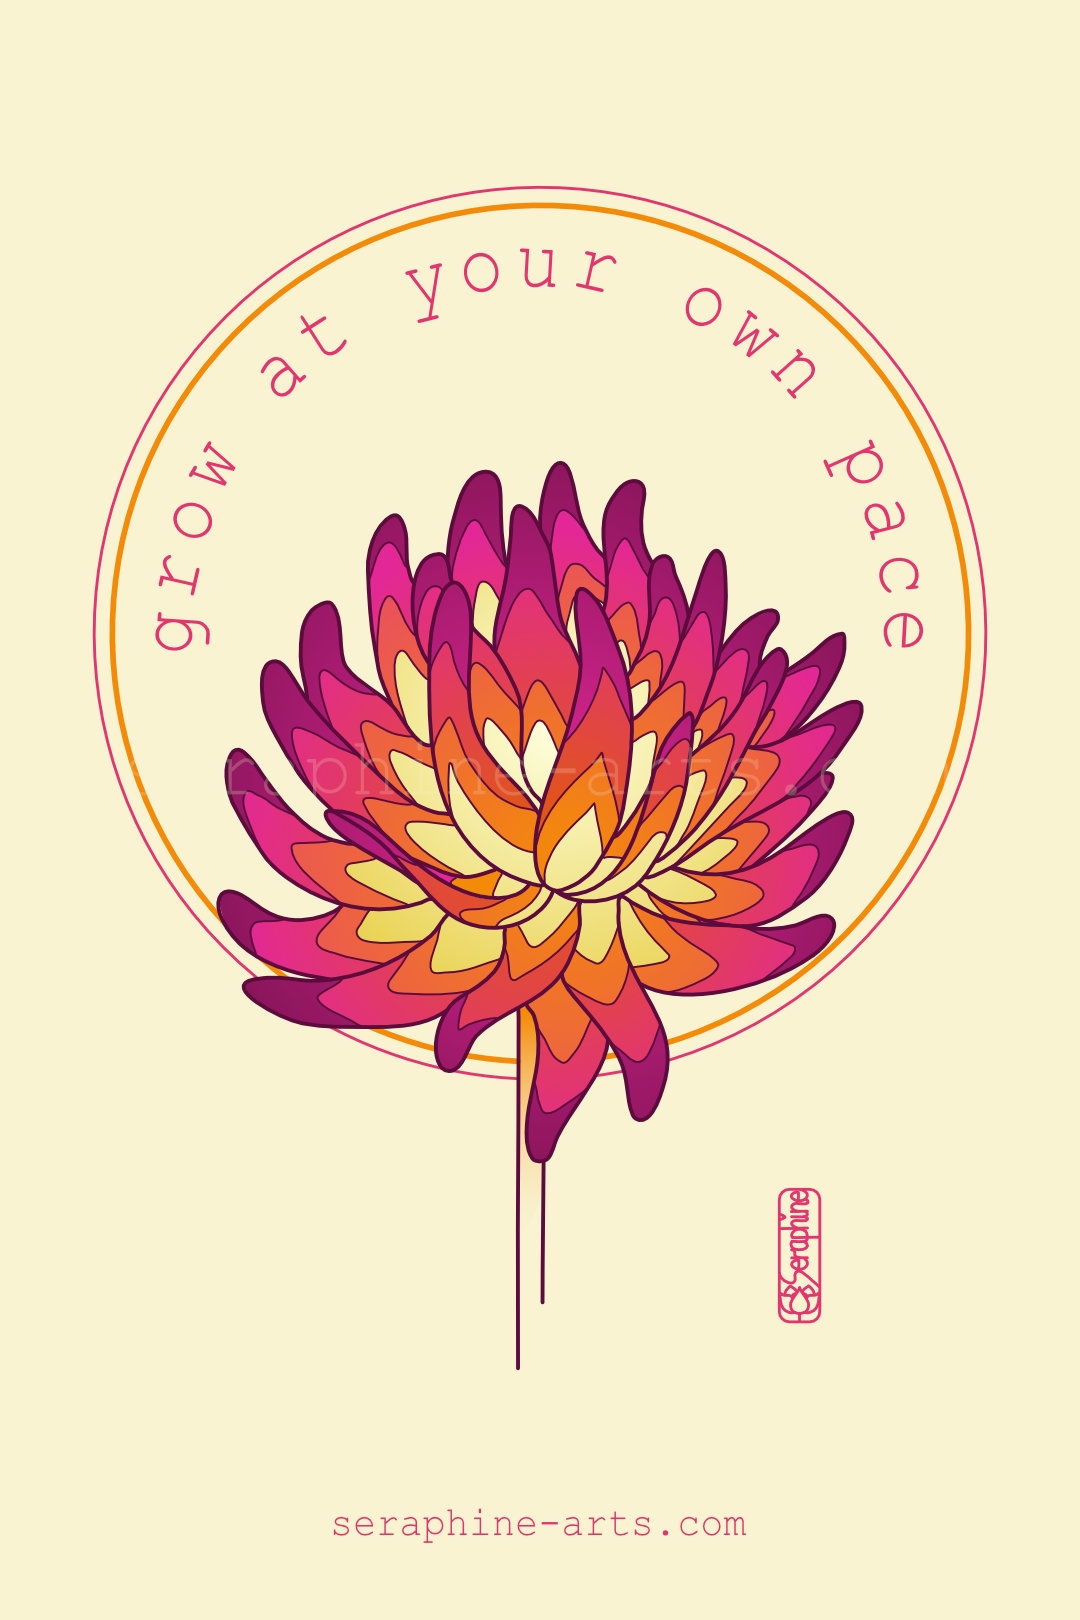 images/chrysanthemum-flower-quote.jpg